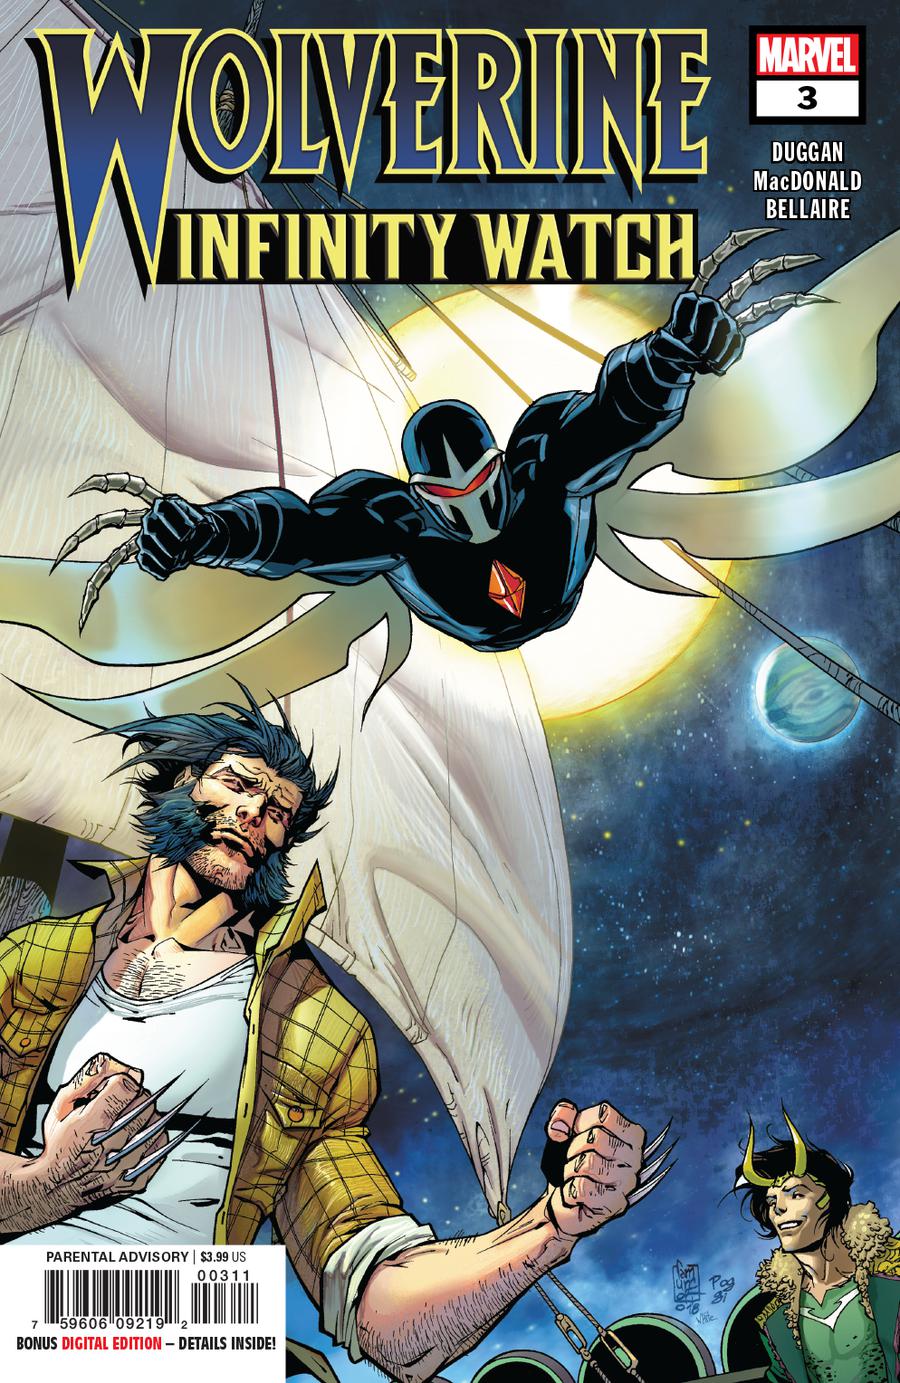 Wolverine Infinity Watch #3